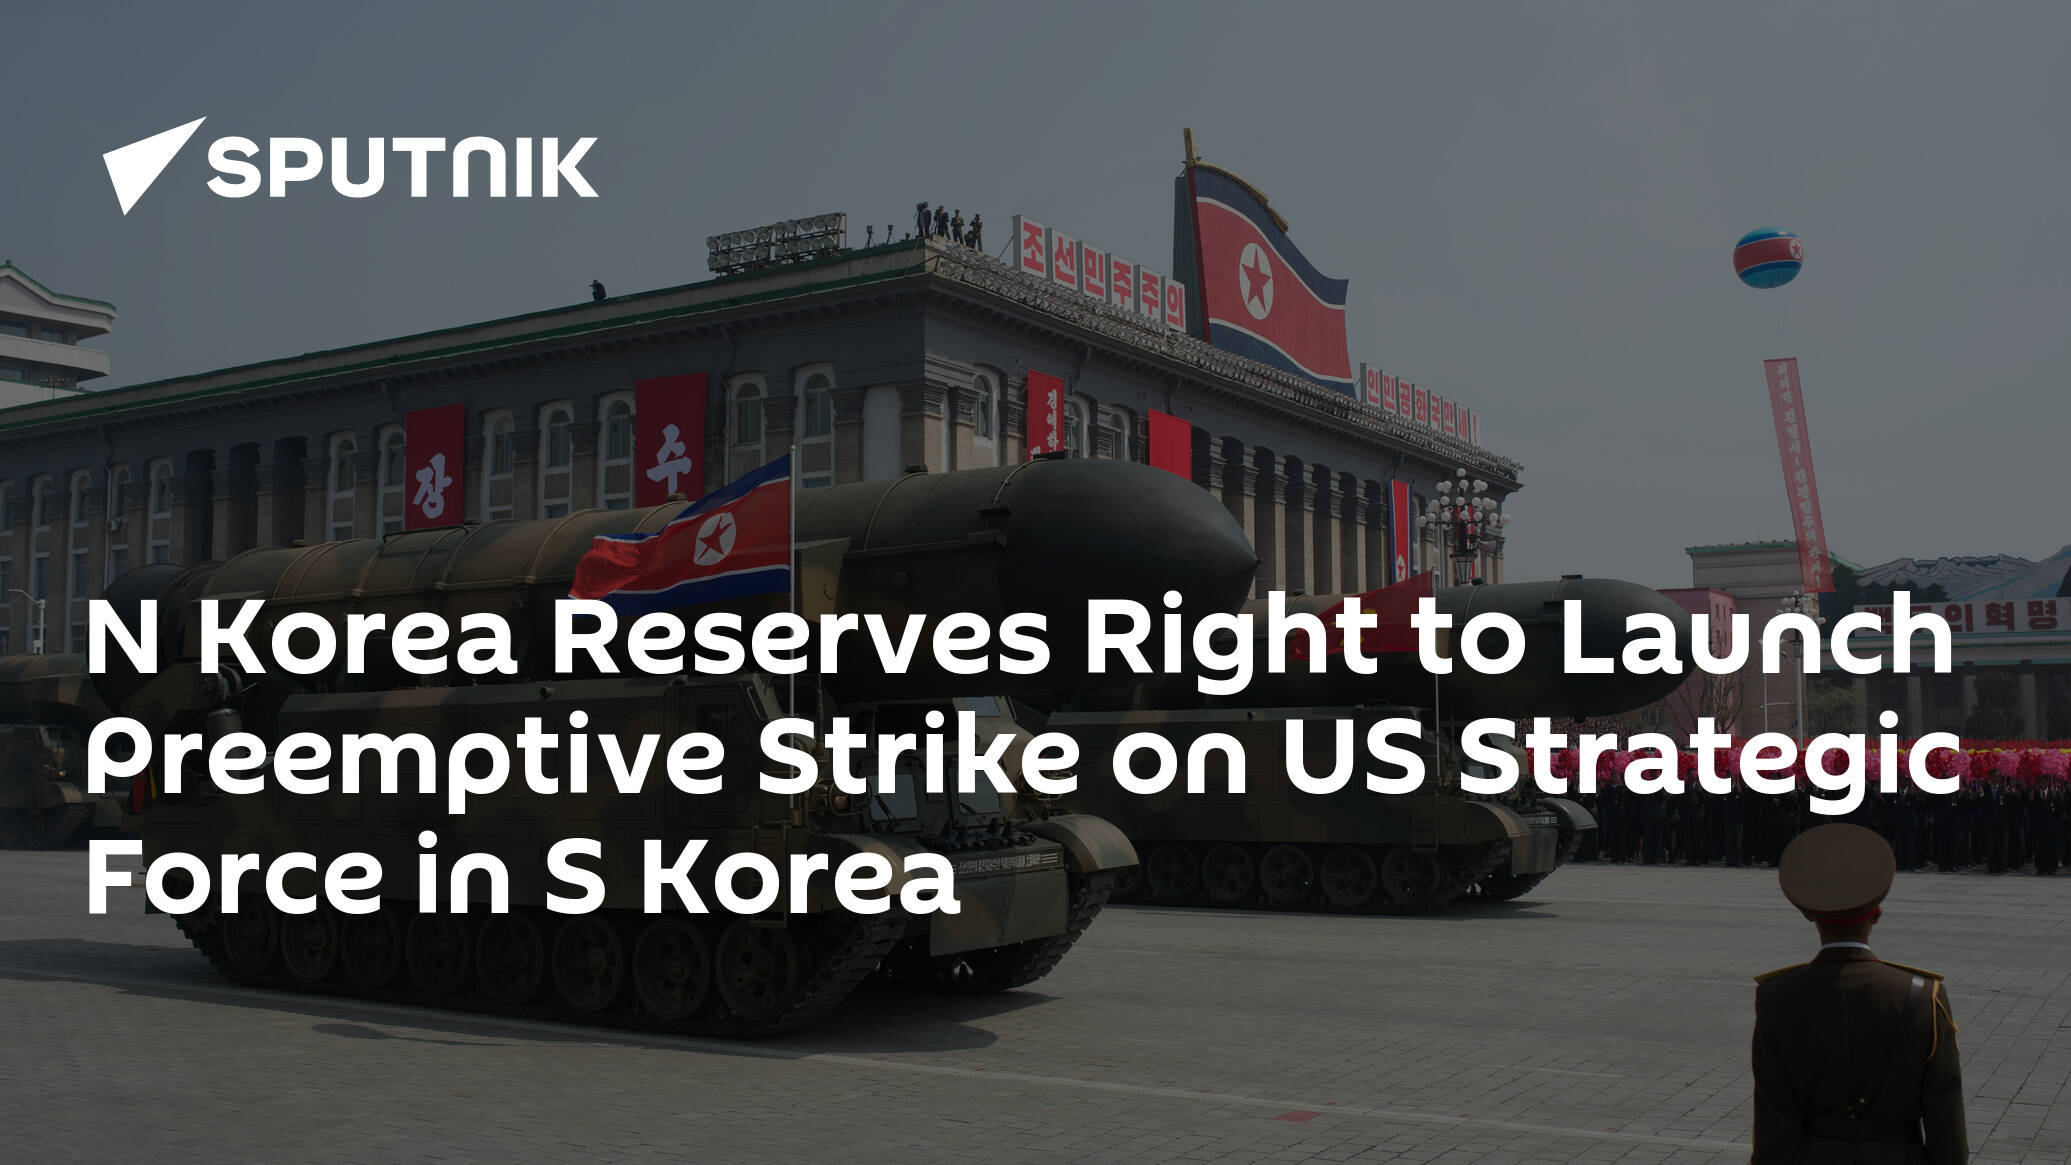 N Korea Reserves Right to Launch Preemptive Strike on US Strategic Force in S Korea